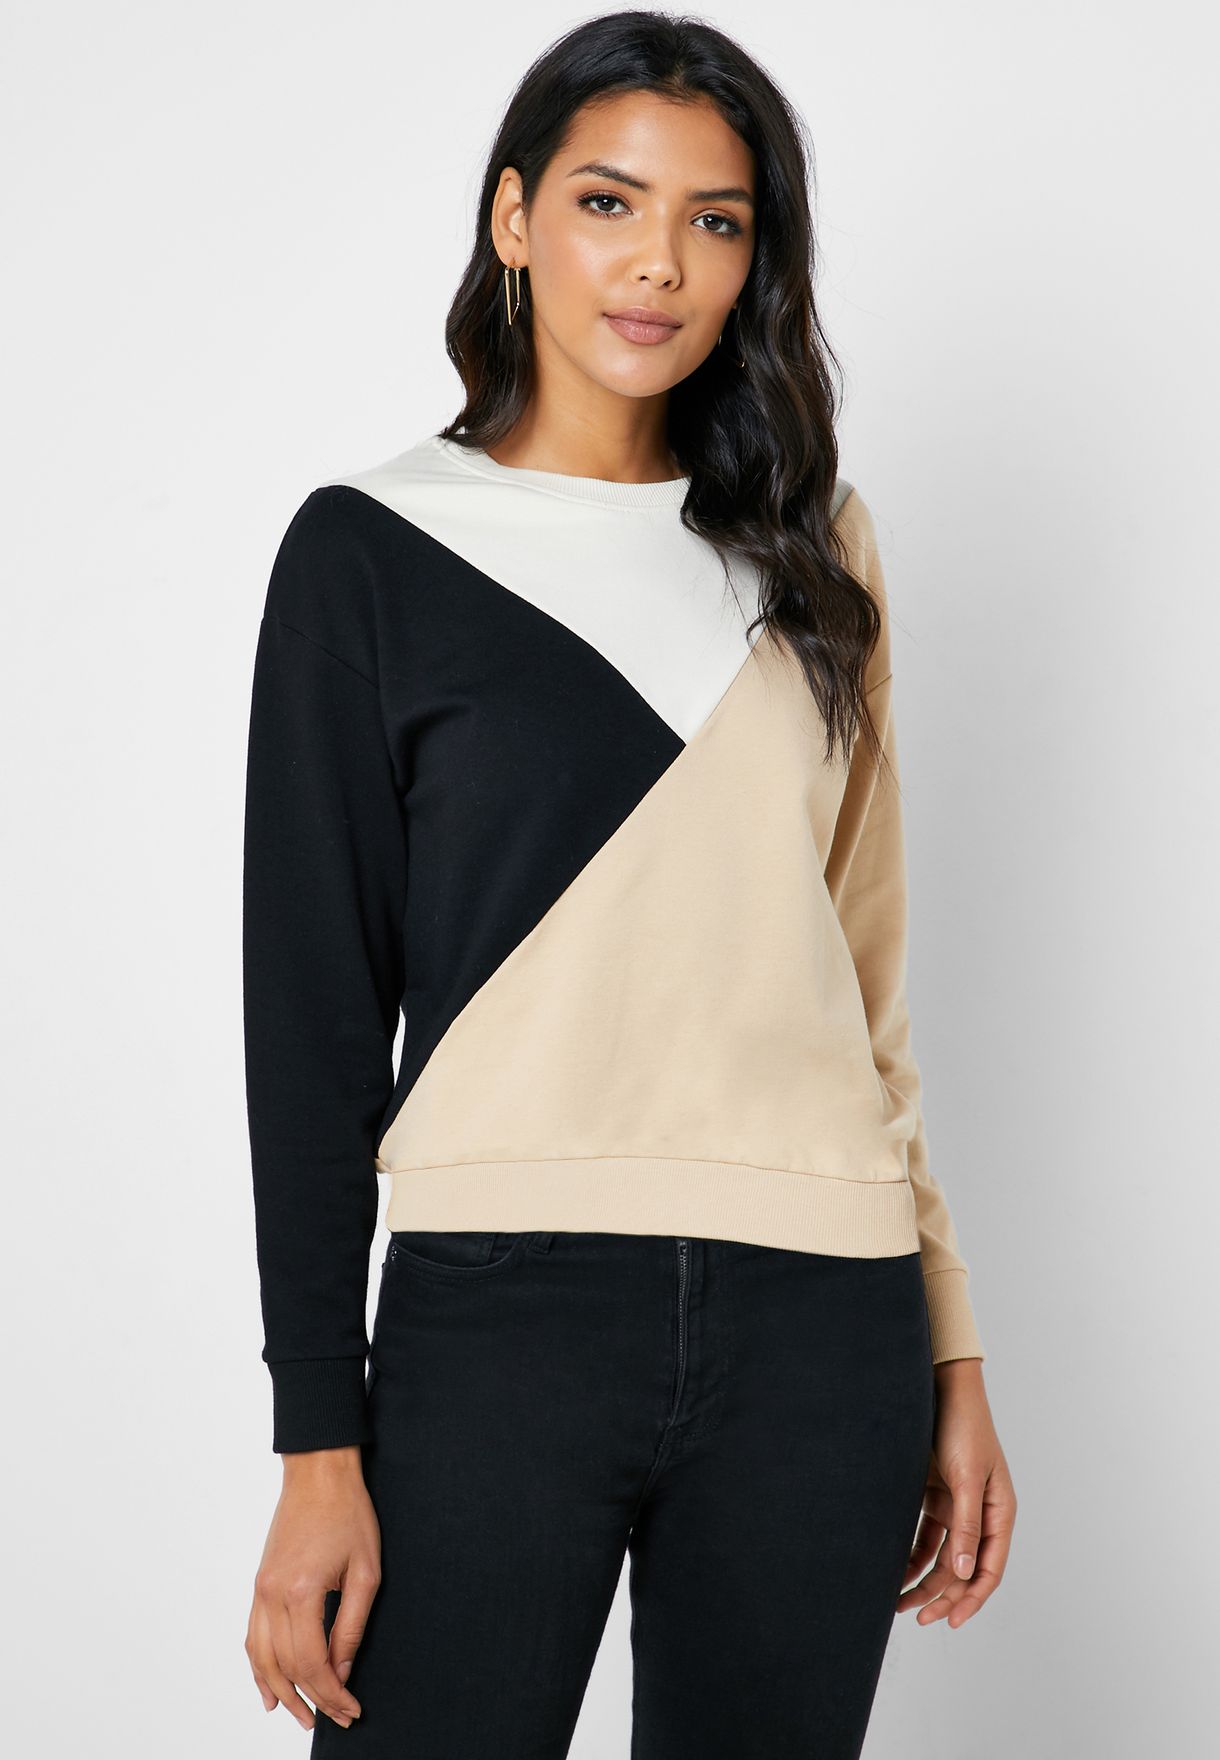 colour blocking sweatshirt